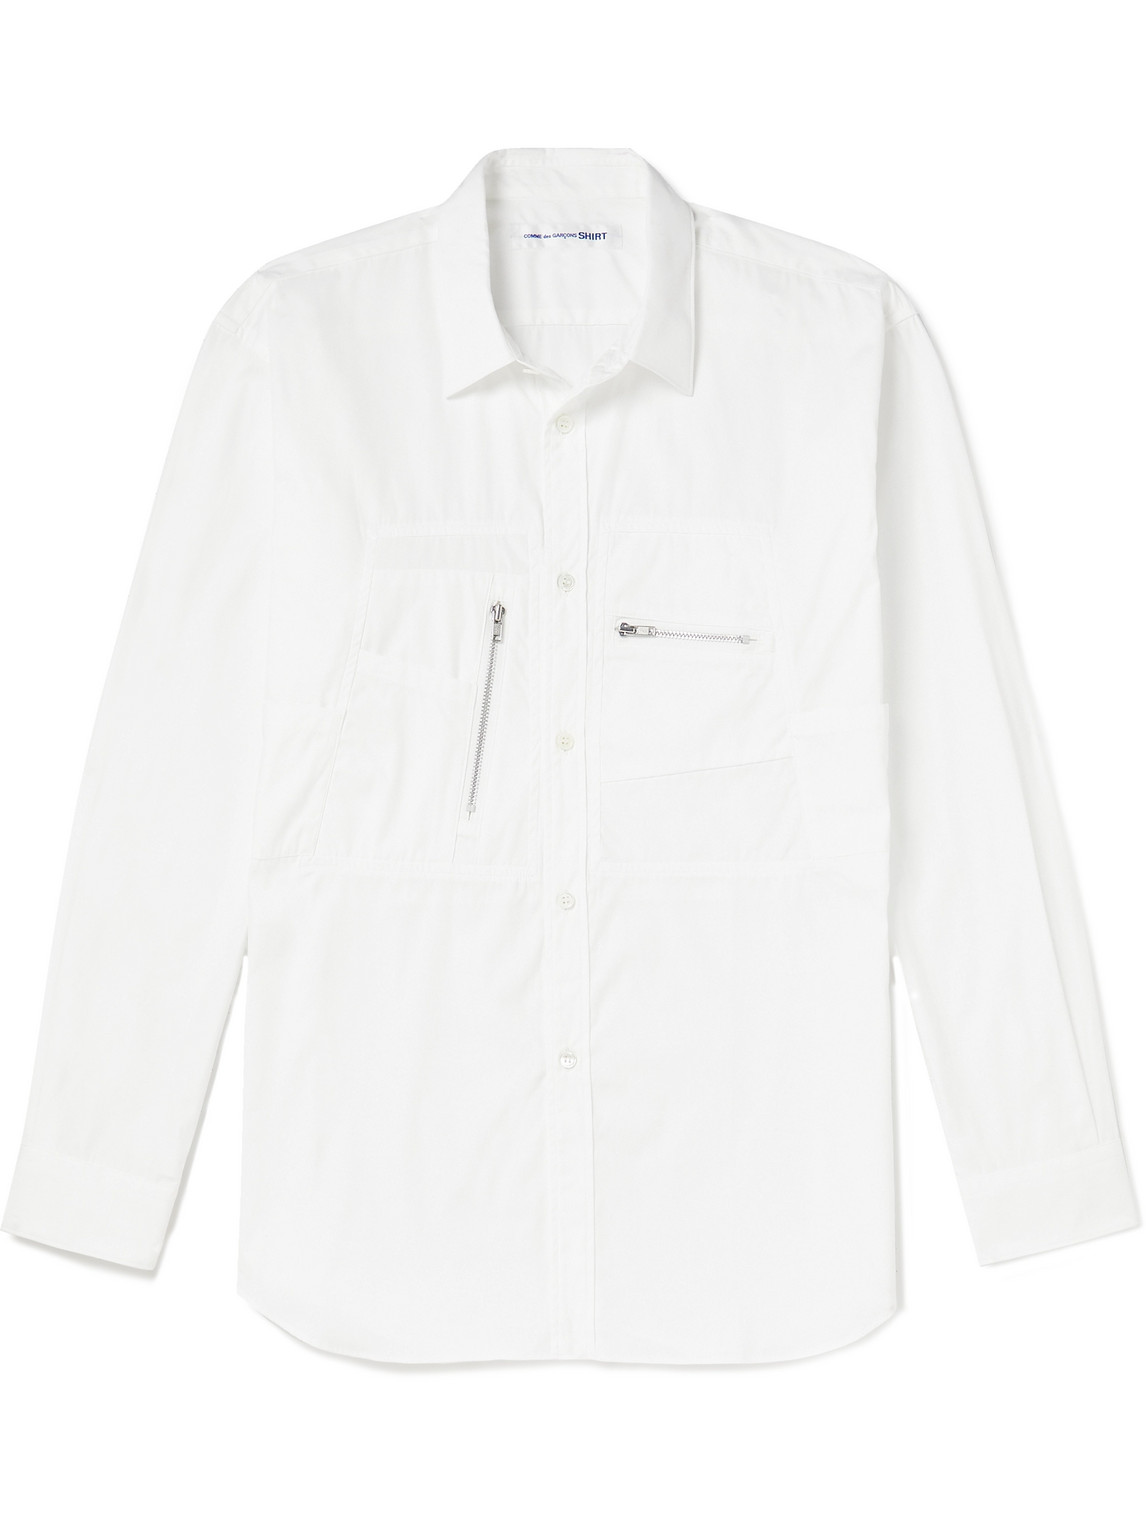 Comme des Garçons SHIRT - Zip-Detailed Cotton-Poplin Shirt - Men - White - M